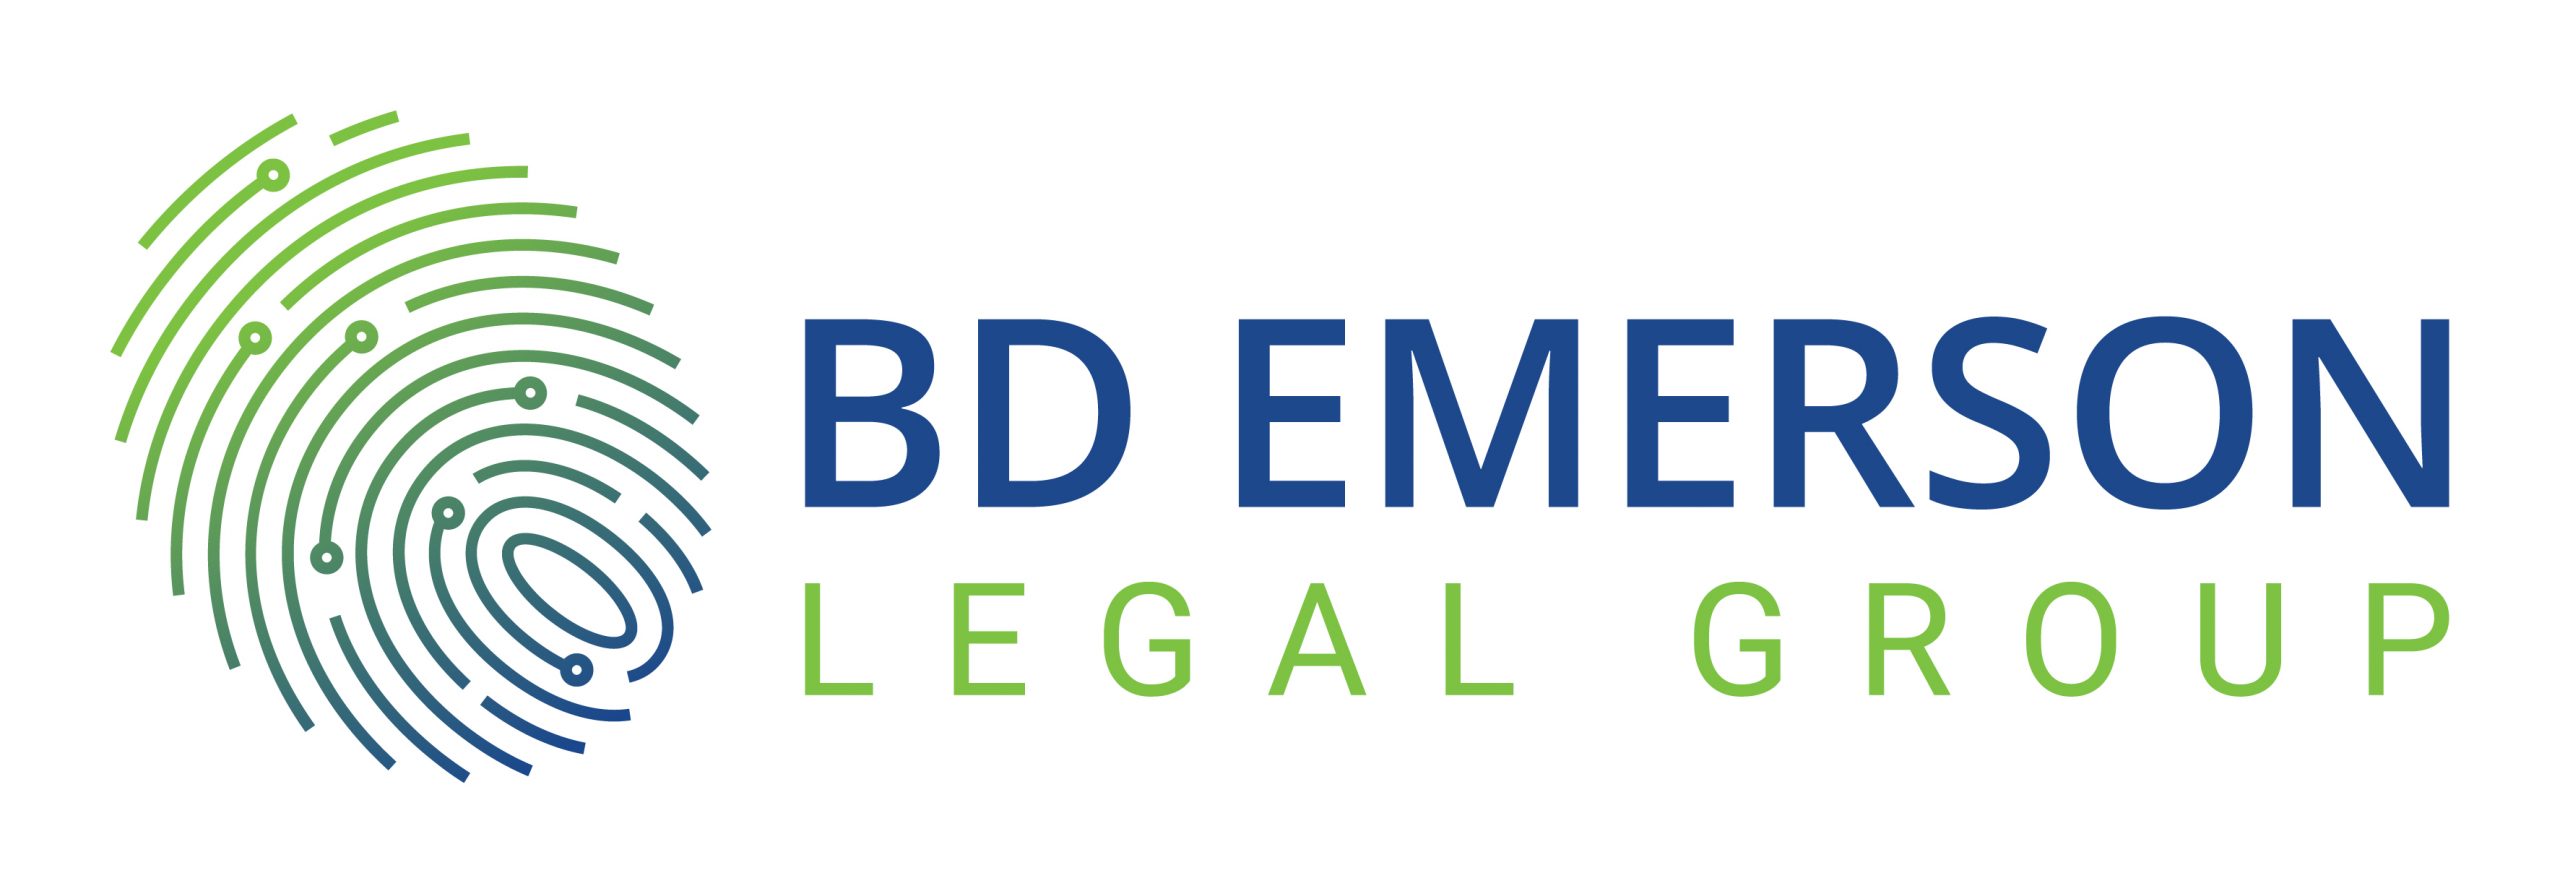 bd emerson law logo